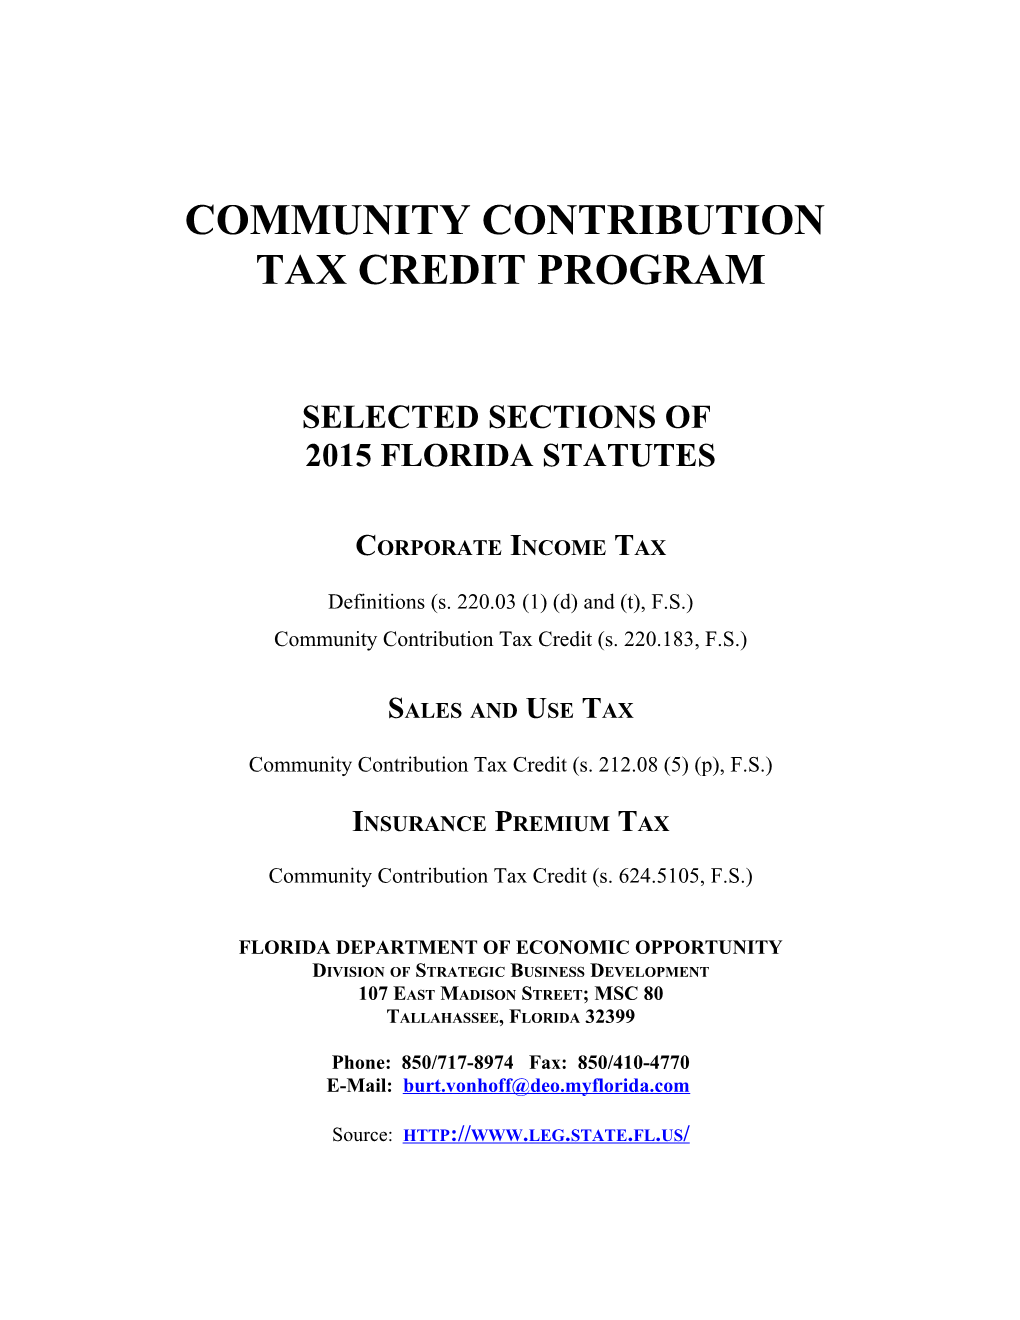 Community Contribution Tax Credit Program